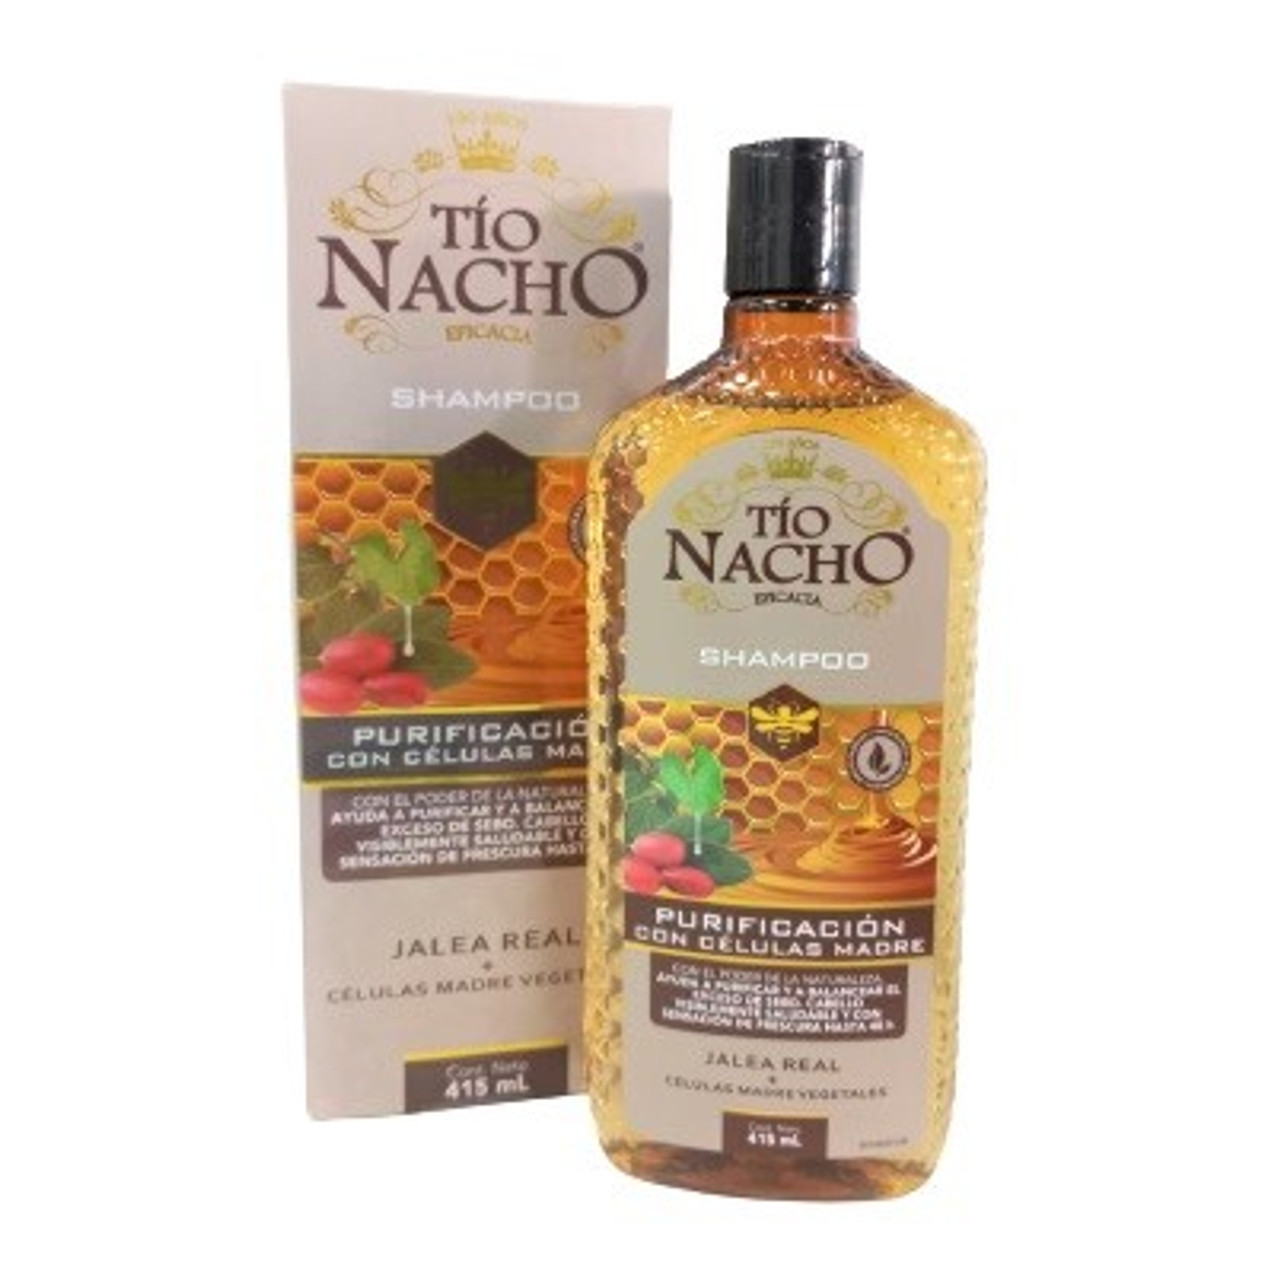 Tío Nacho Shampoo Shampoo with Royal & Plant Stem Cells, 415 ml / 14 fl